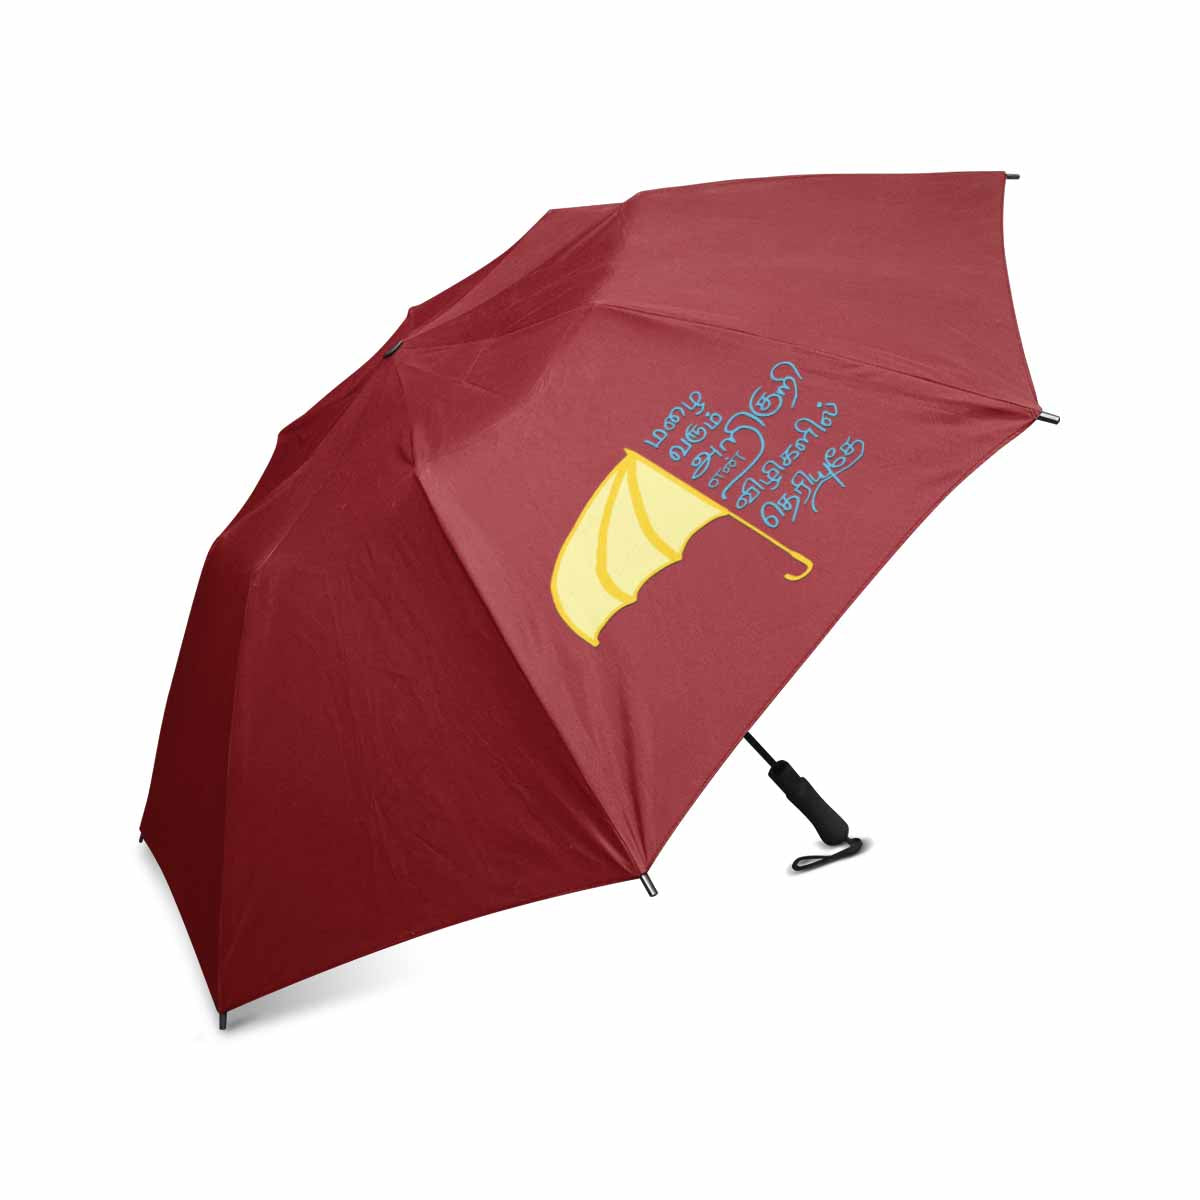 Red Thamizh semi automatic foldable umbrella 42 inch mazhai varum arikuri gift idea for friends and family